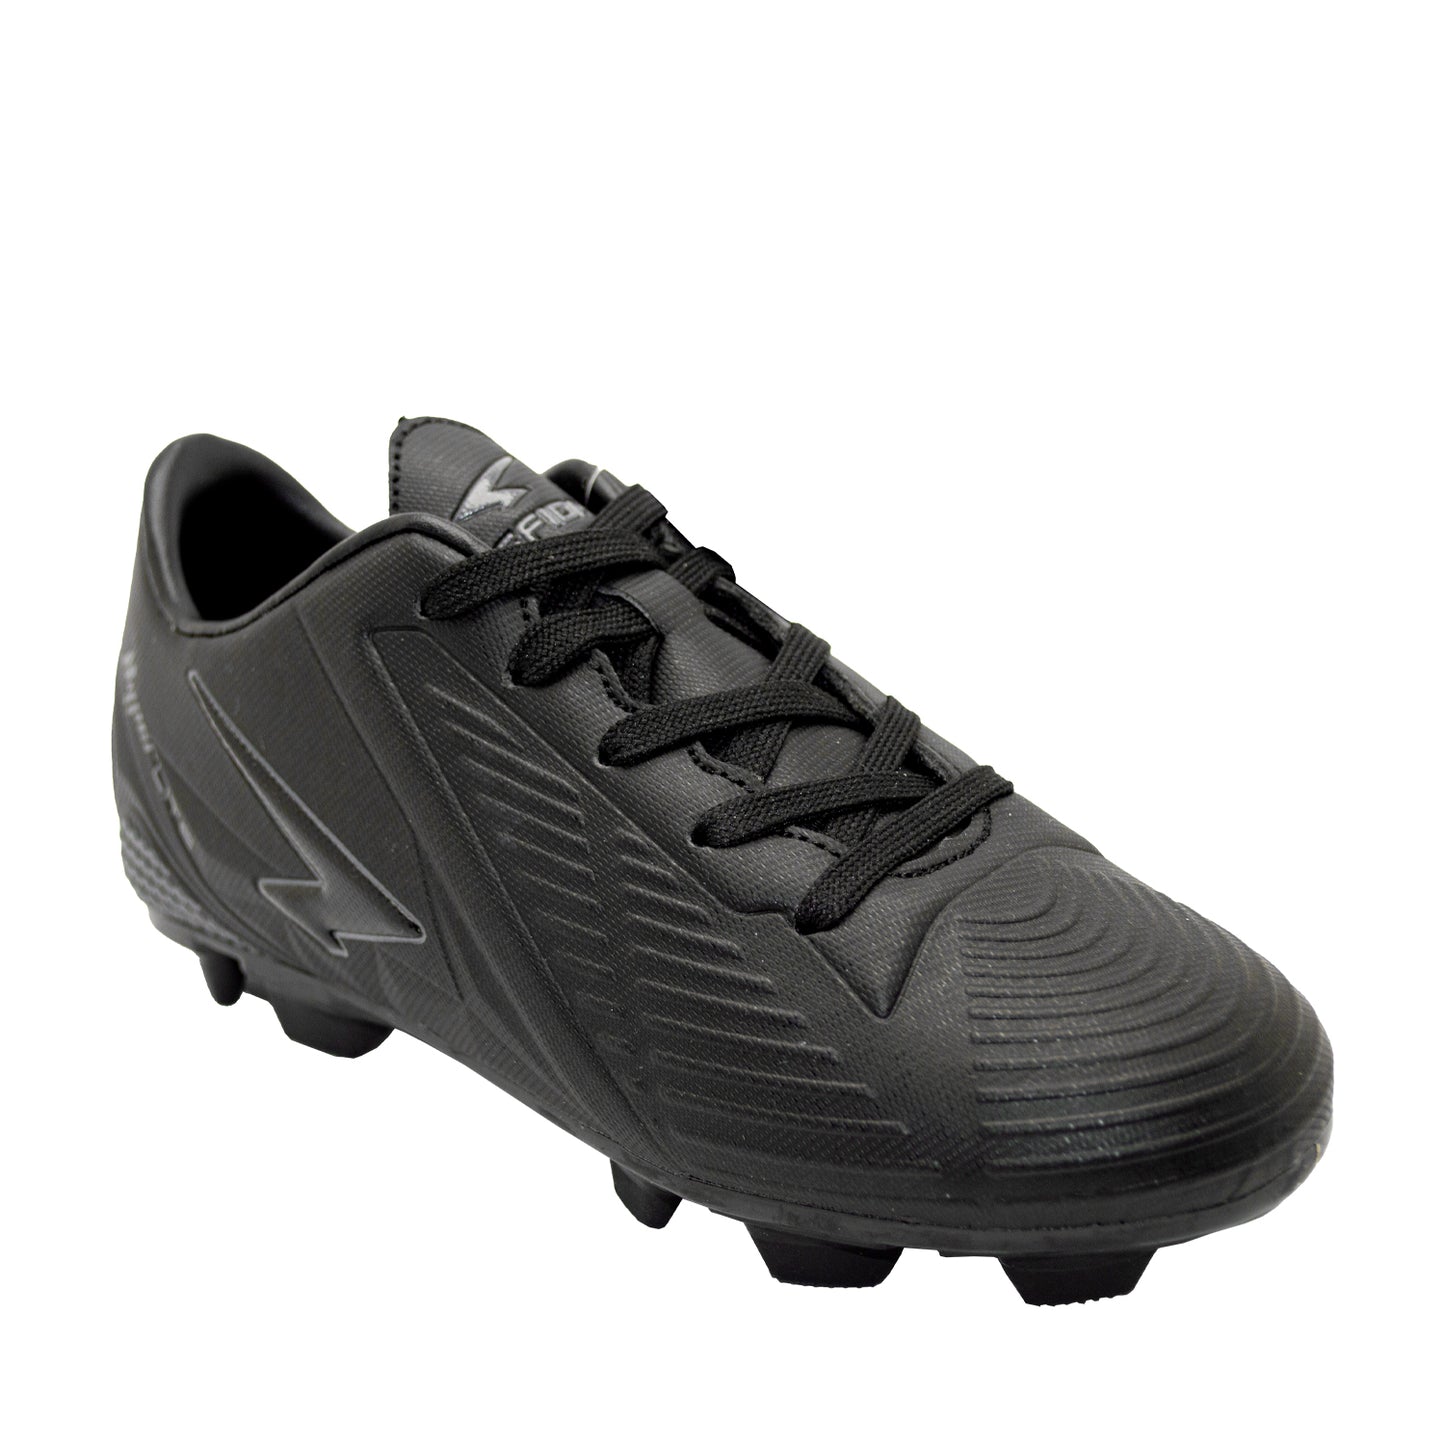 Vector Senior Football Boots - Black/Black